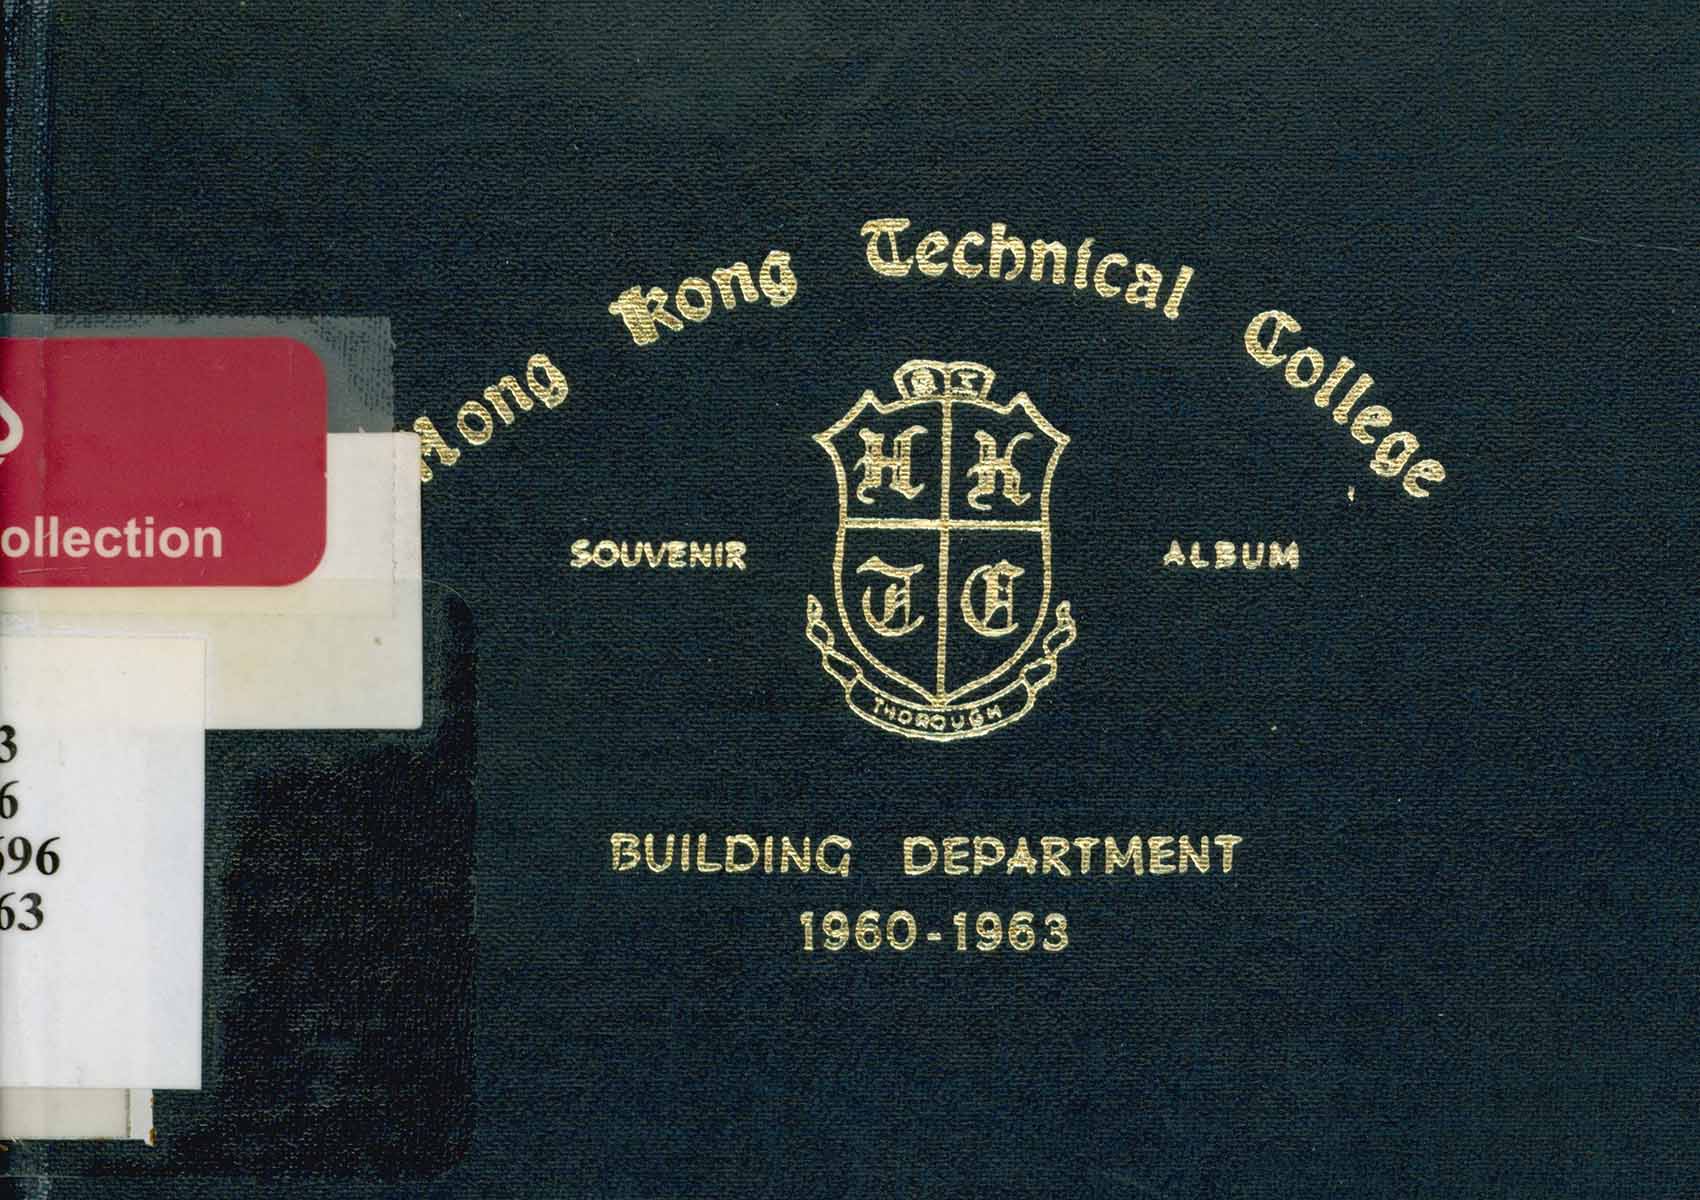 Hong Kong Technical College. Building Department. Souvenir album: 1960-1963